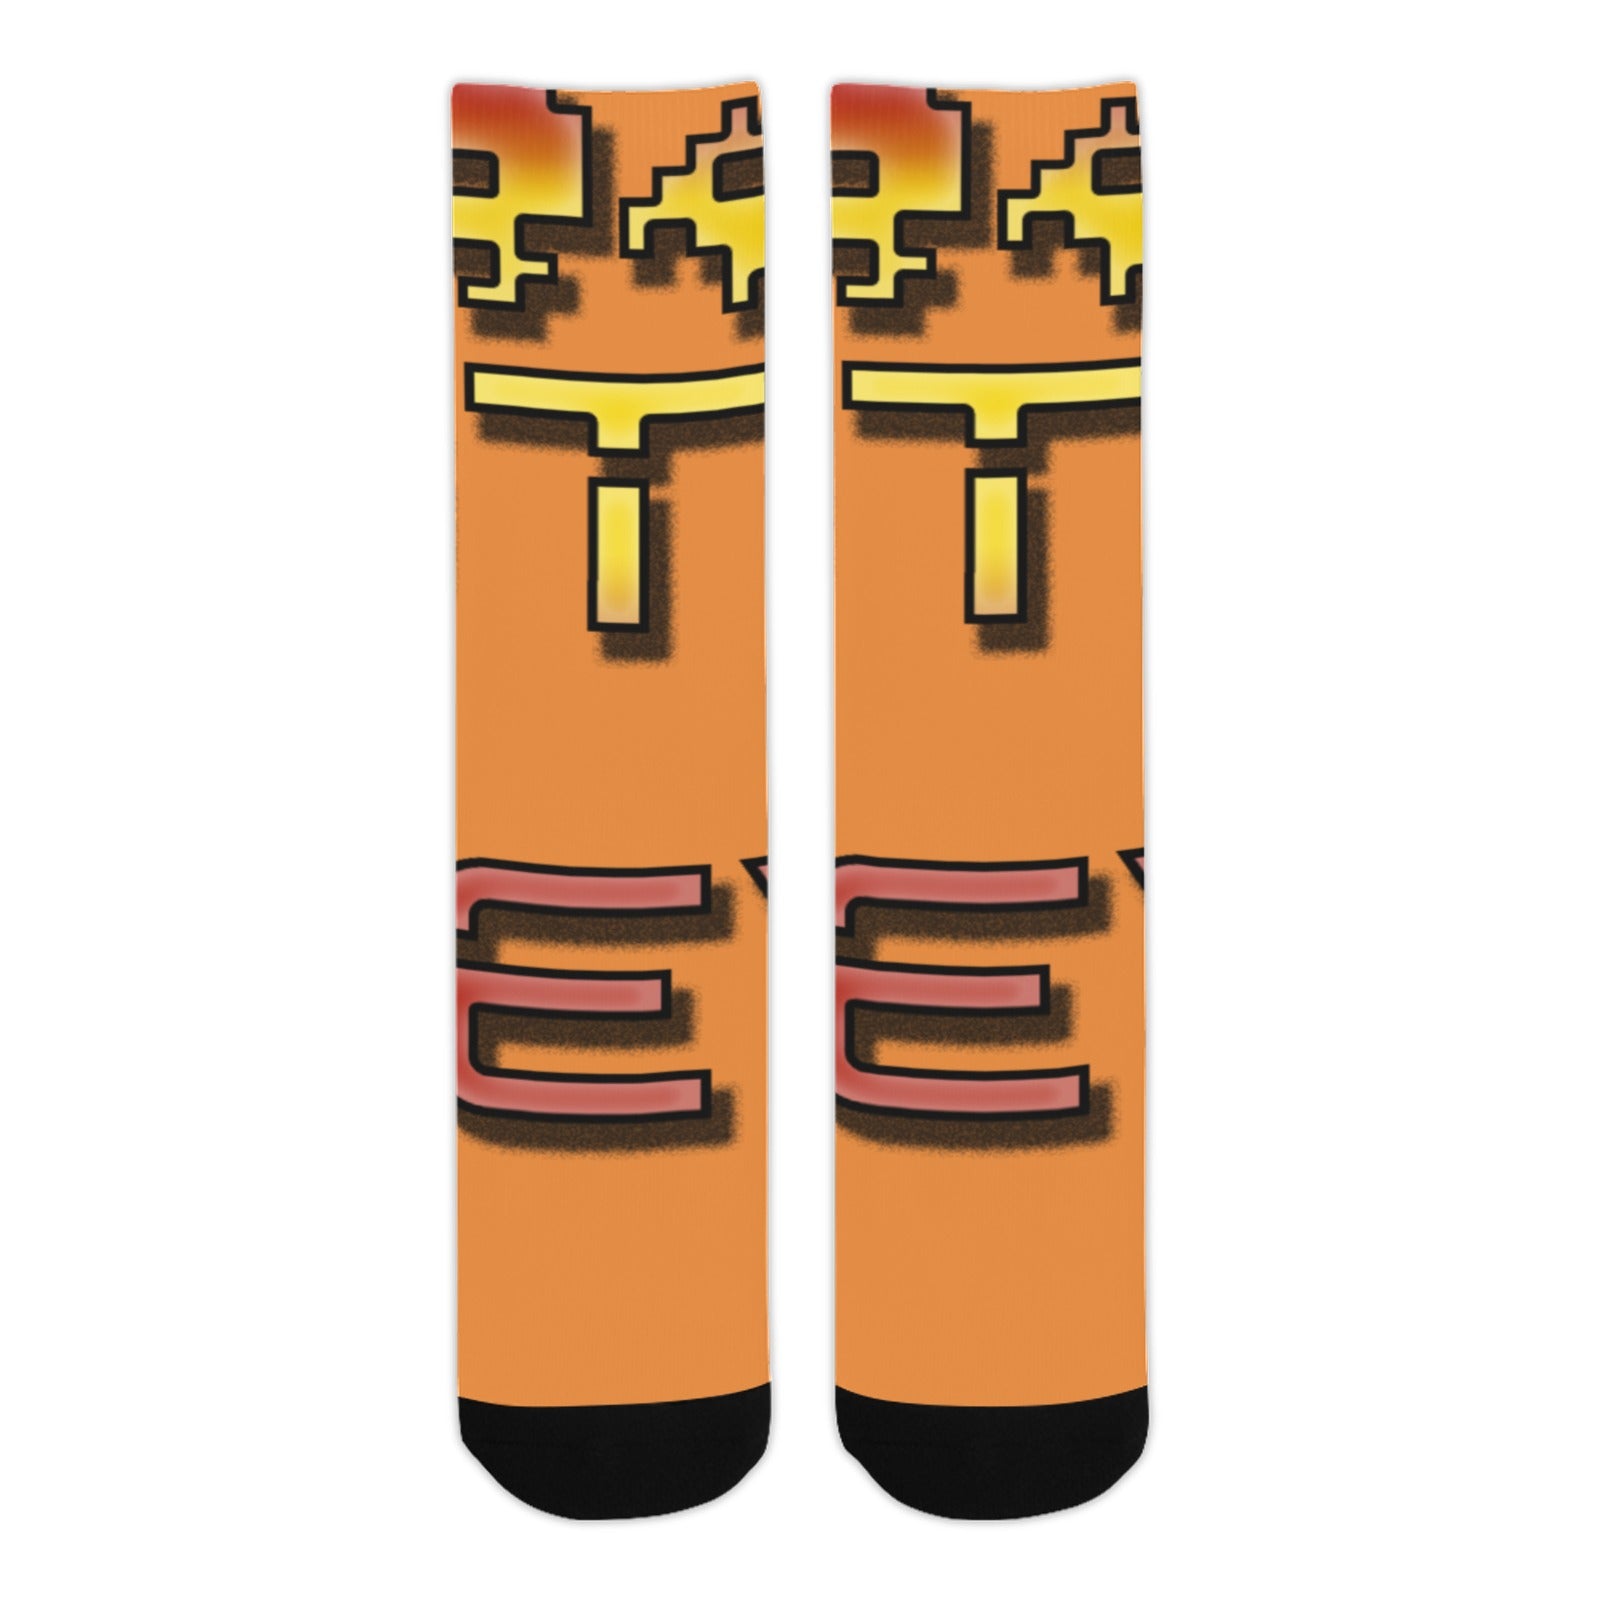 fz unisex socks - red one size / fz socks - orange sublimated crew socks(made in usa)